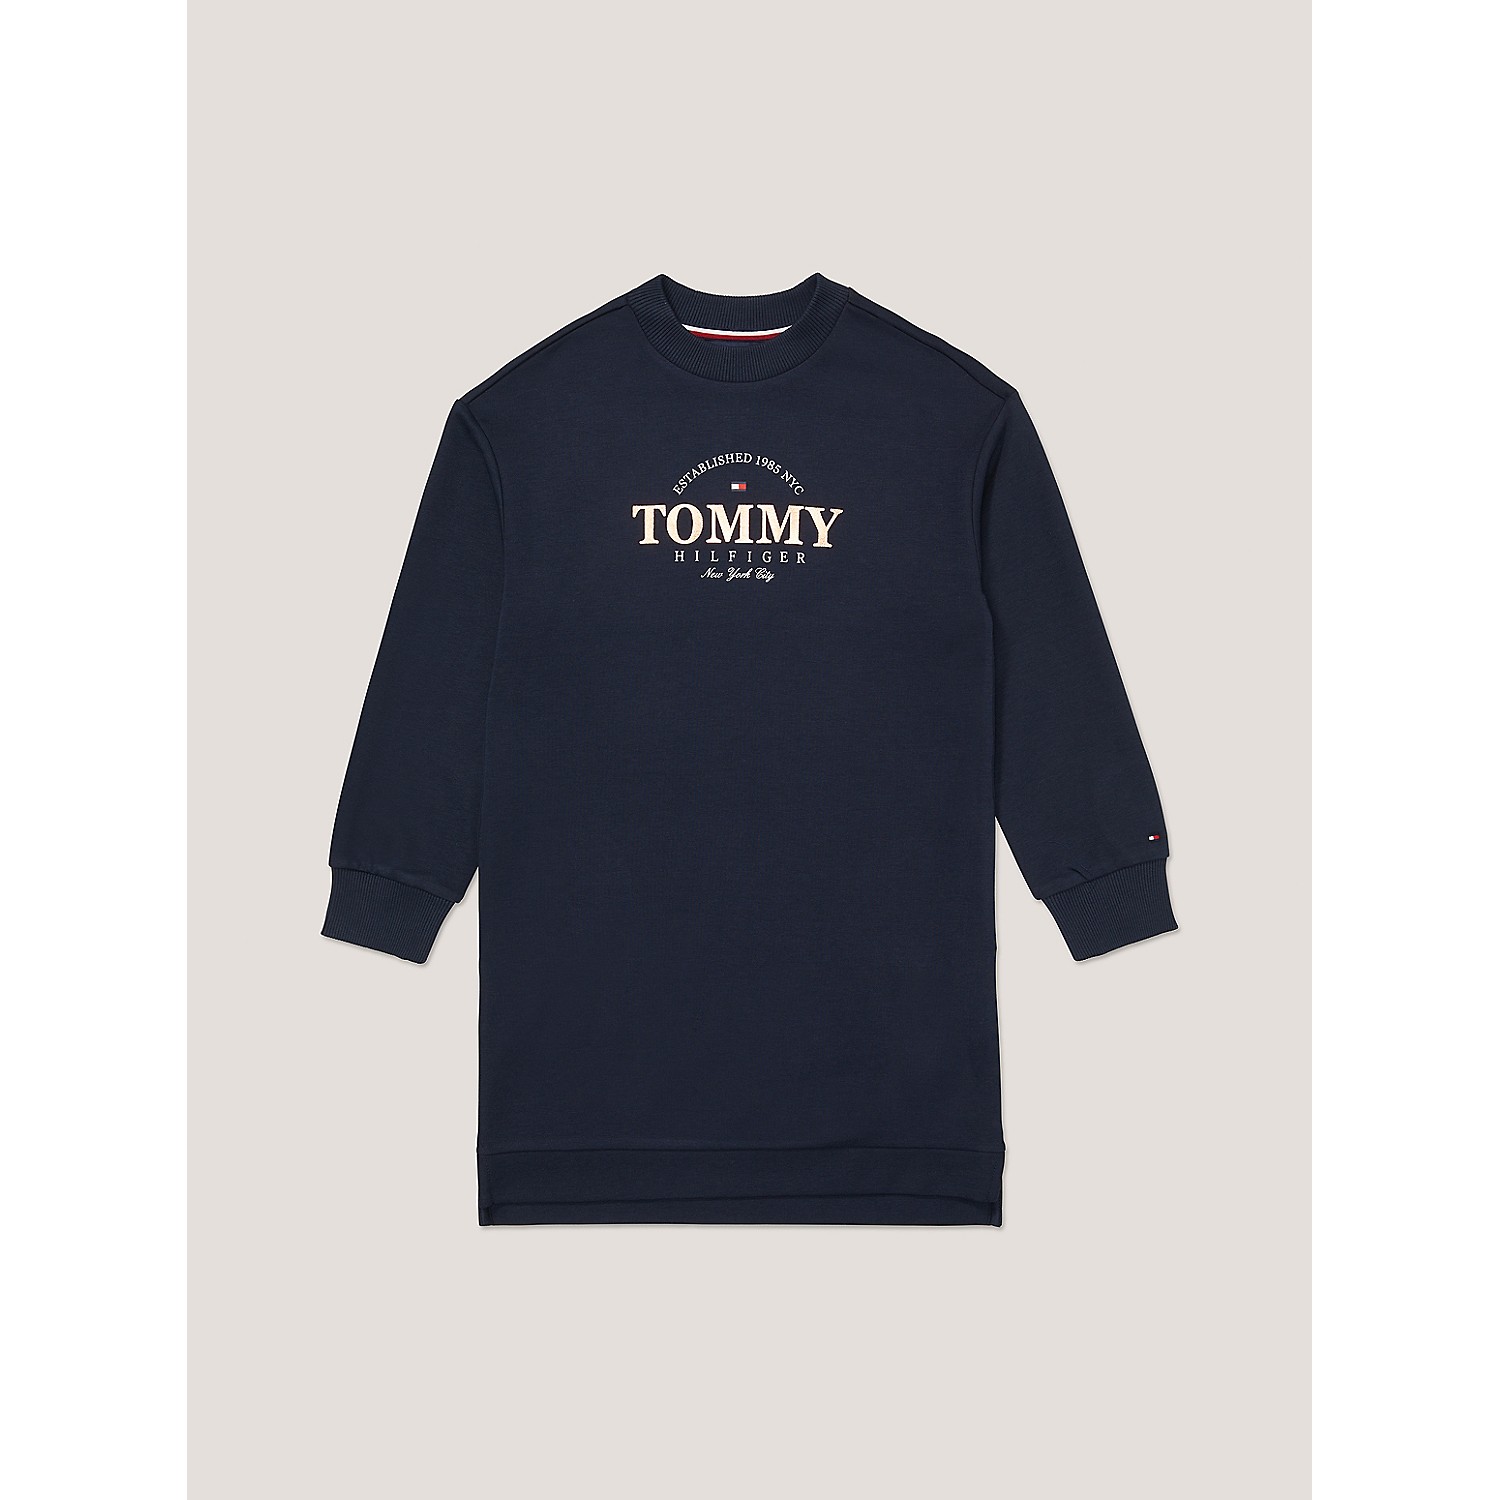 TOMMY HILFIGER Kids Hilfiger NY Logo Sweatshirt Dress